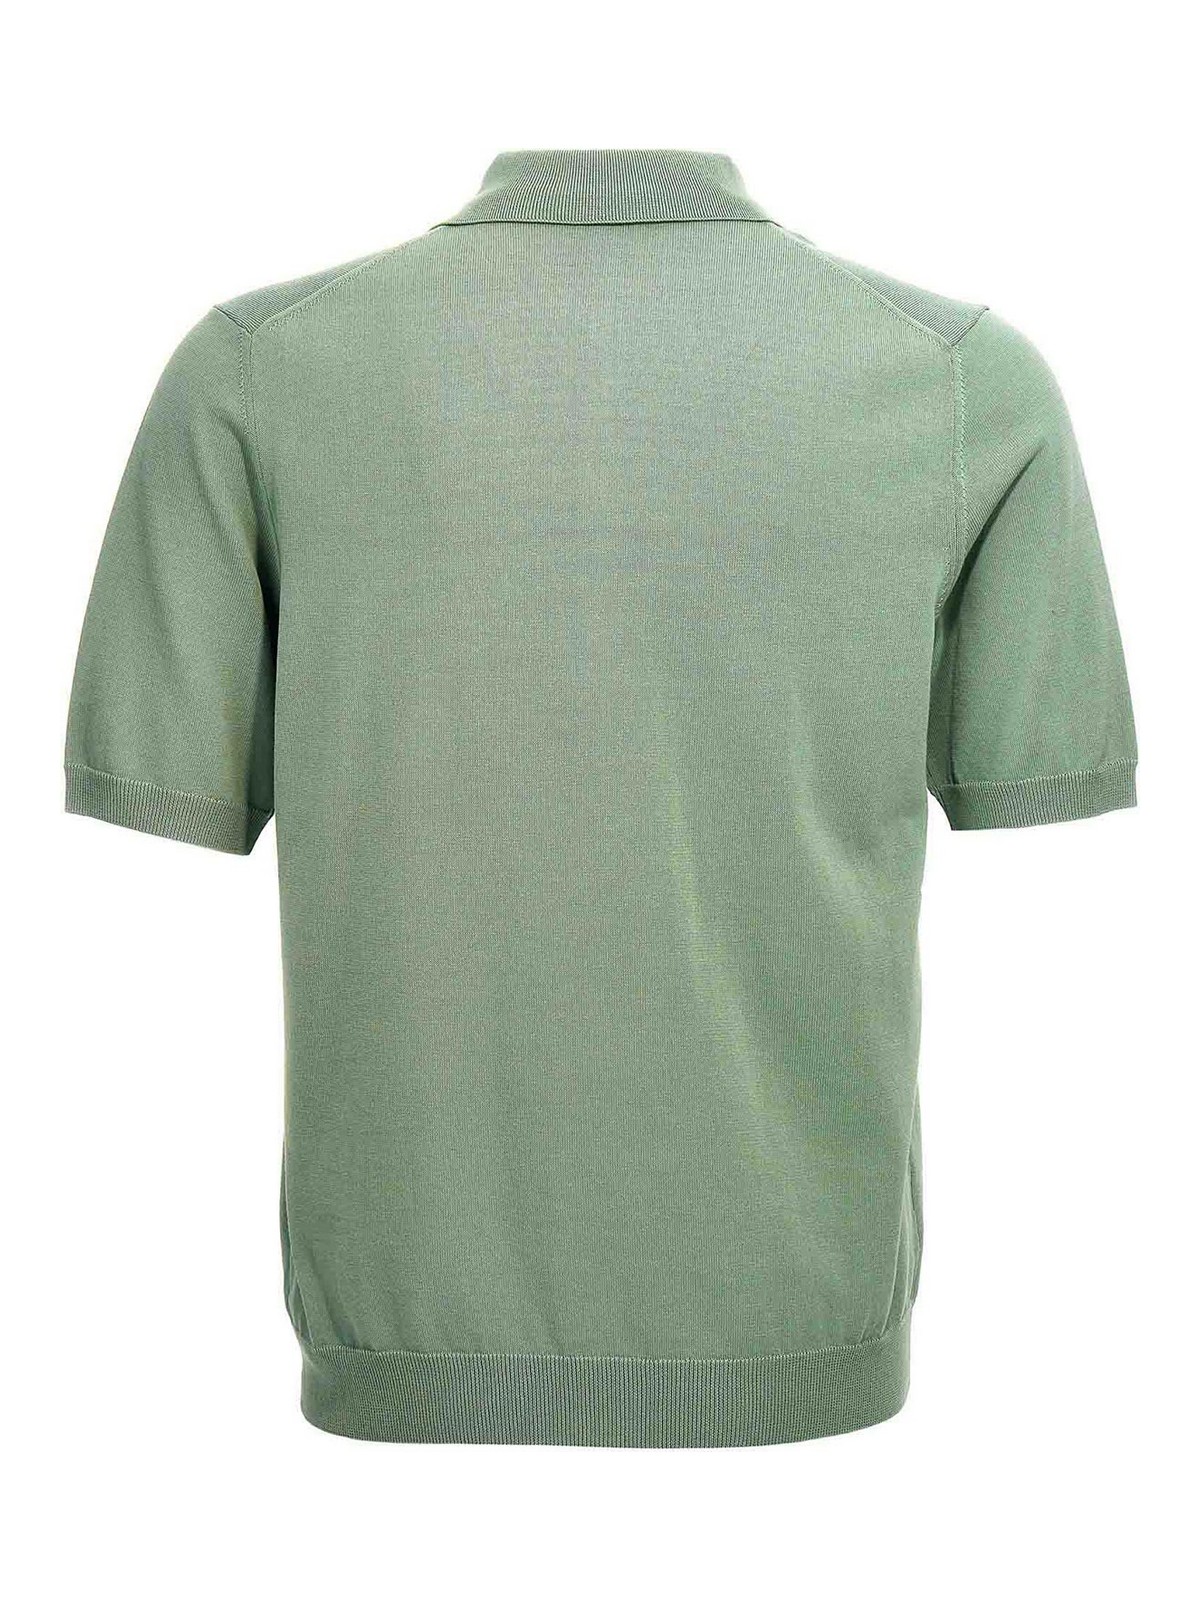 Shop Zanone Cotton Polo Shirt In Verde